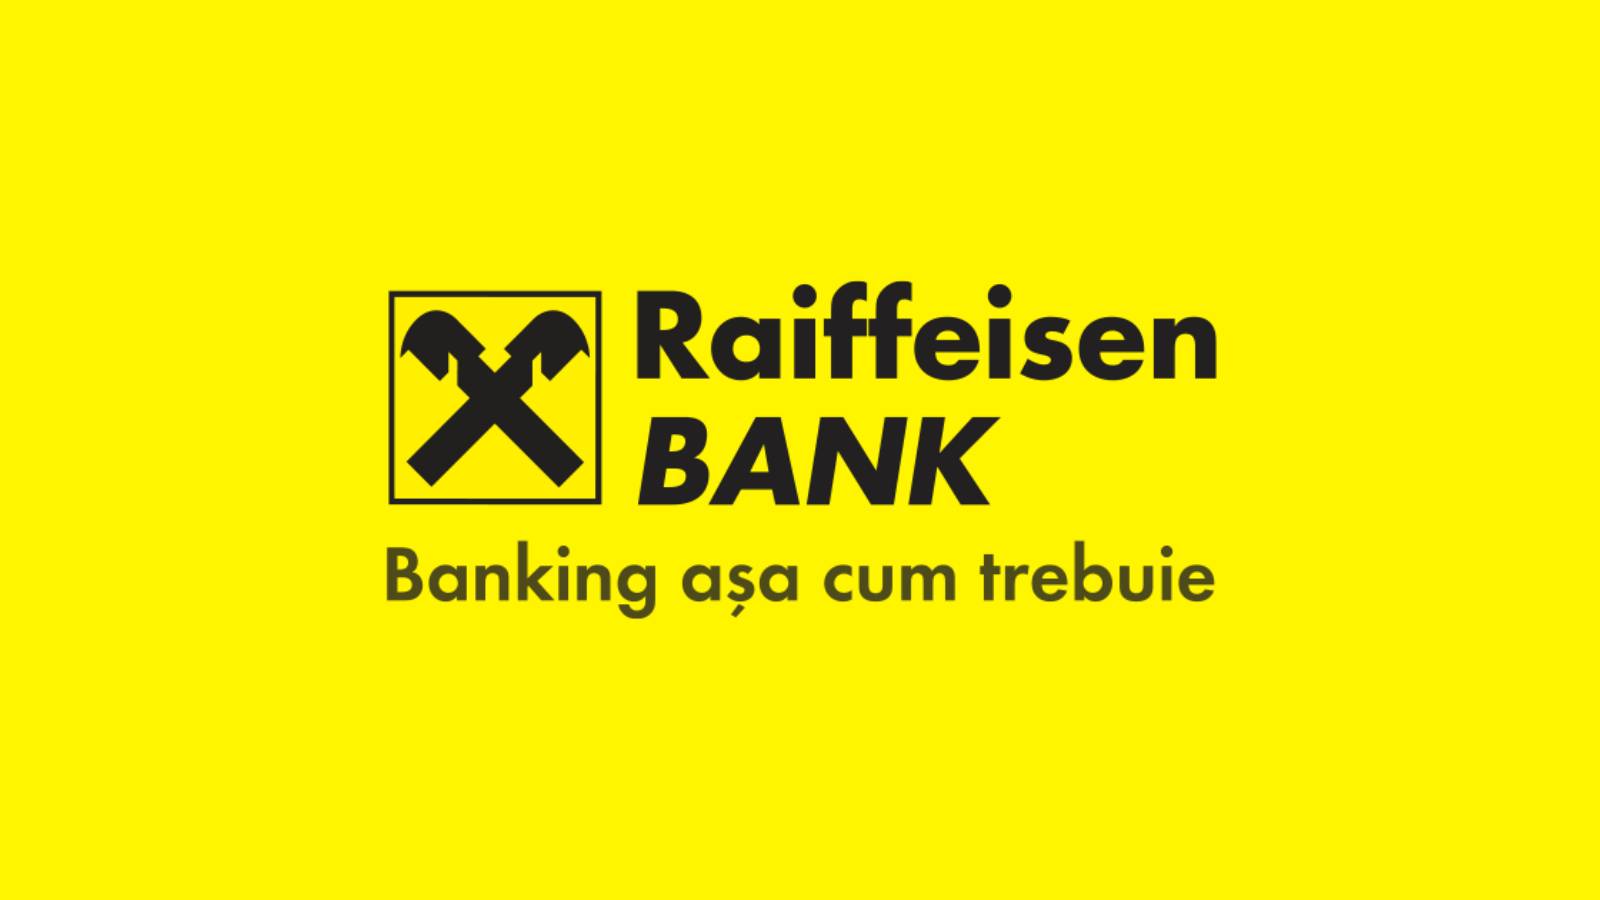 Vettura della Banca Raiffeisen